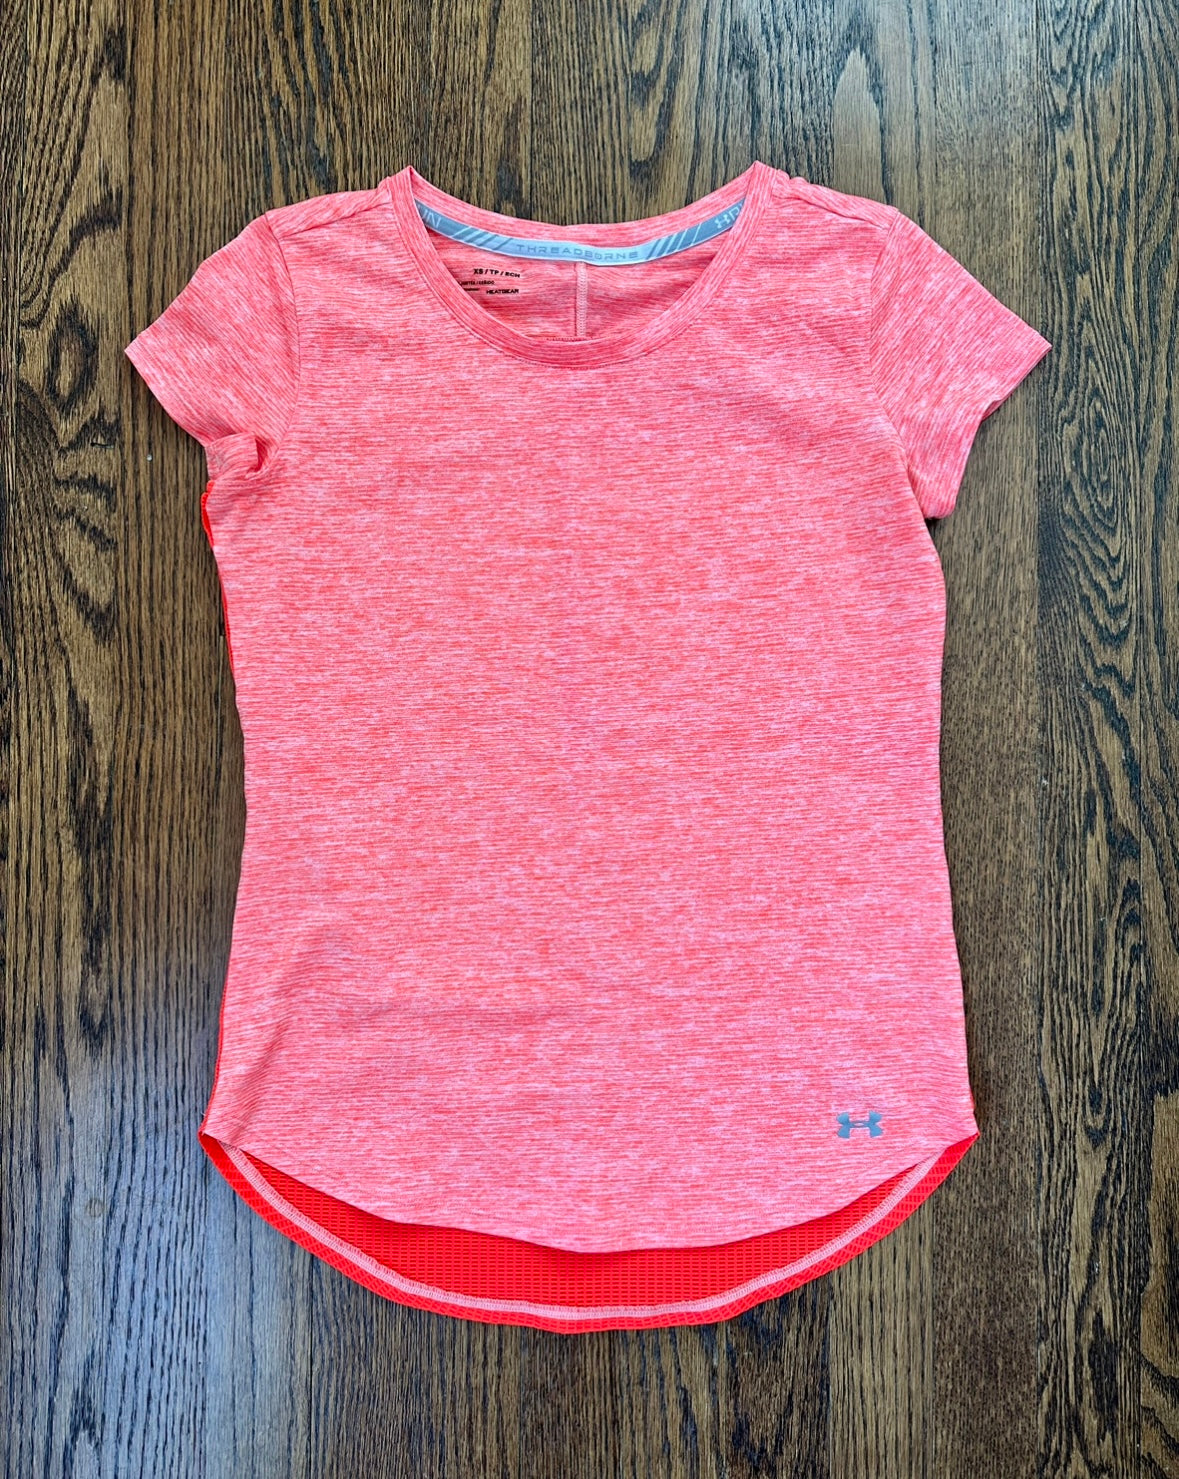 Women's Under Armour Bright Orange Workout Shirt - size XS